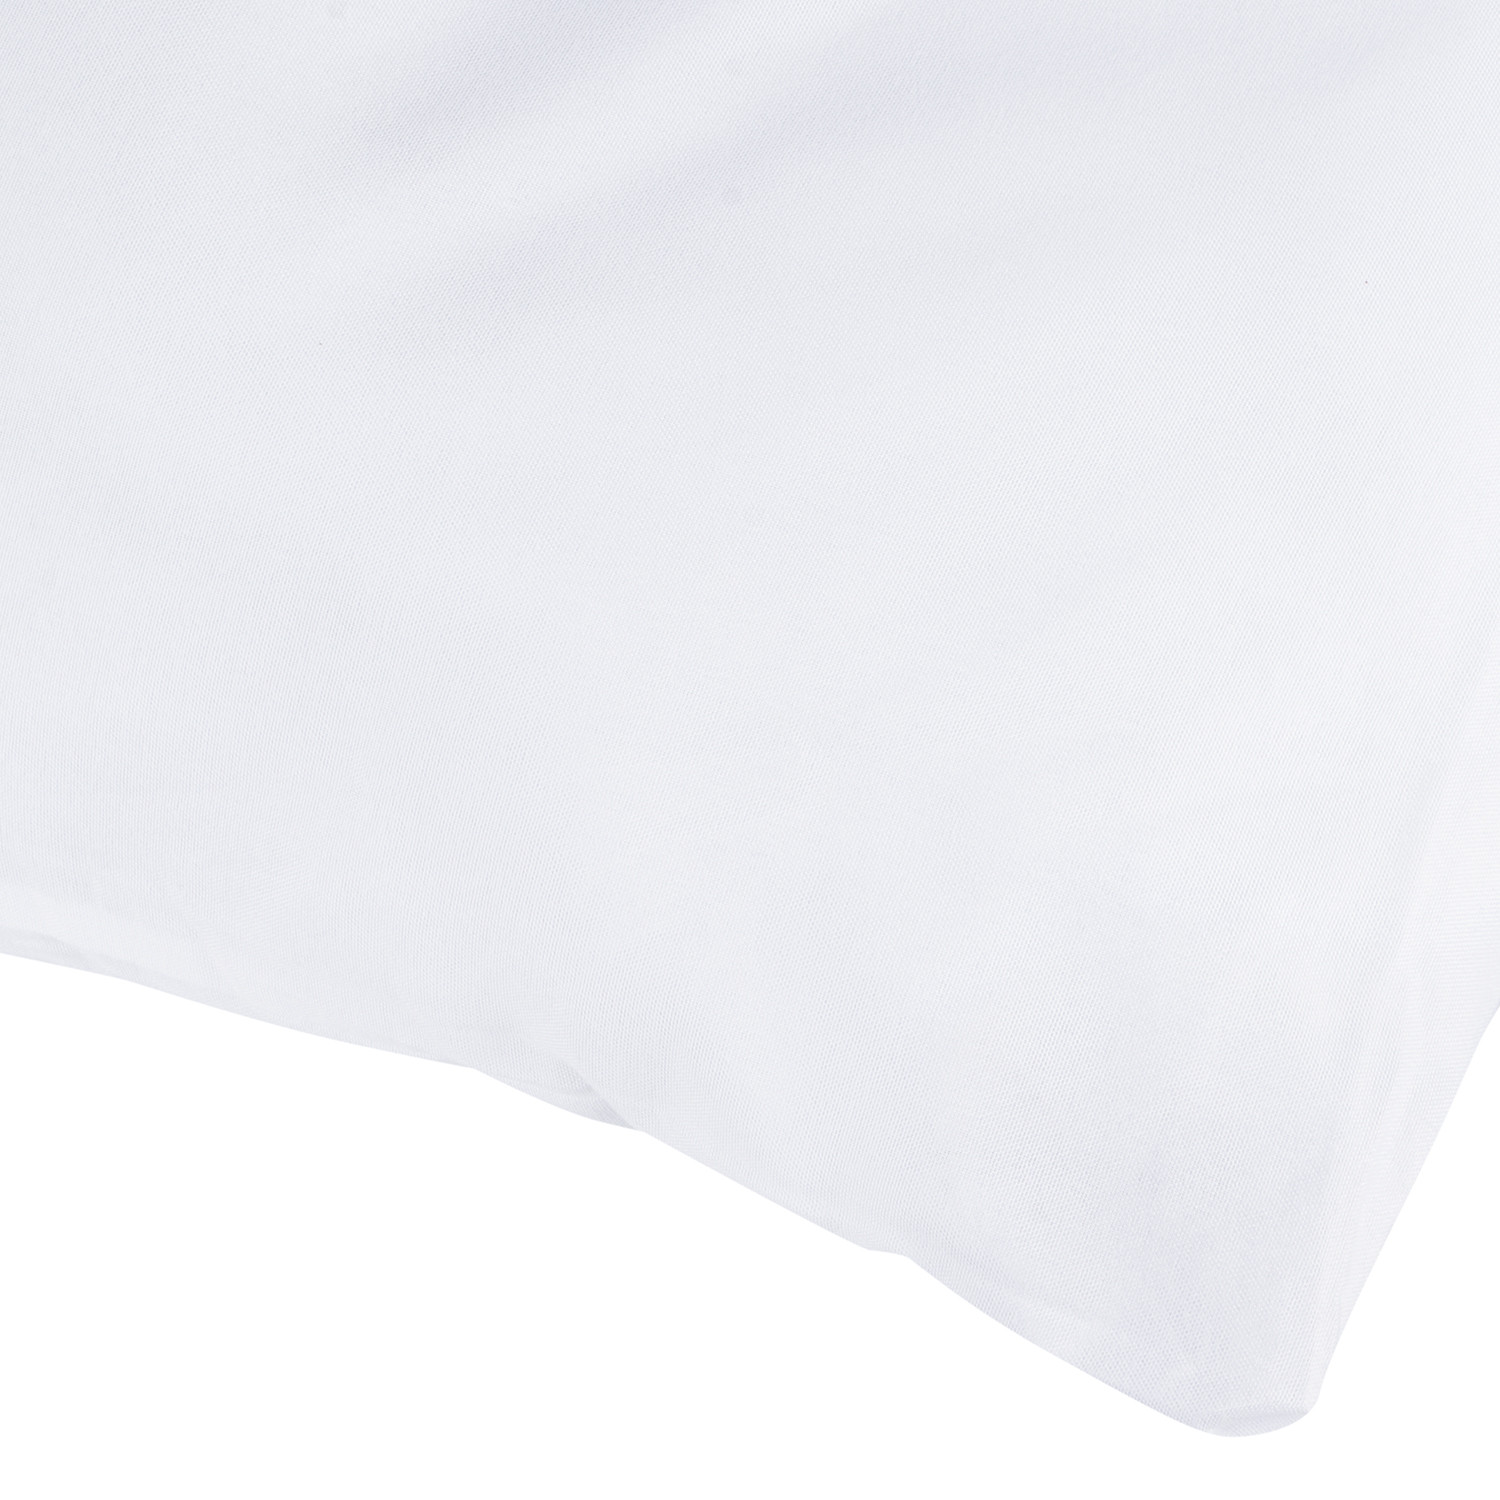 Slumberdown White Washable Pillows 2 Pack Image 2